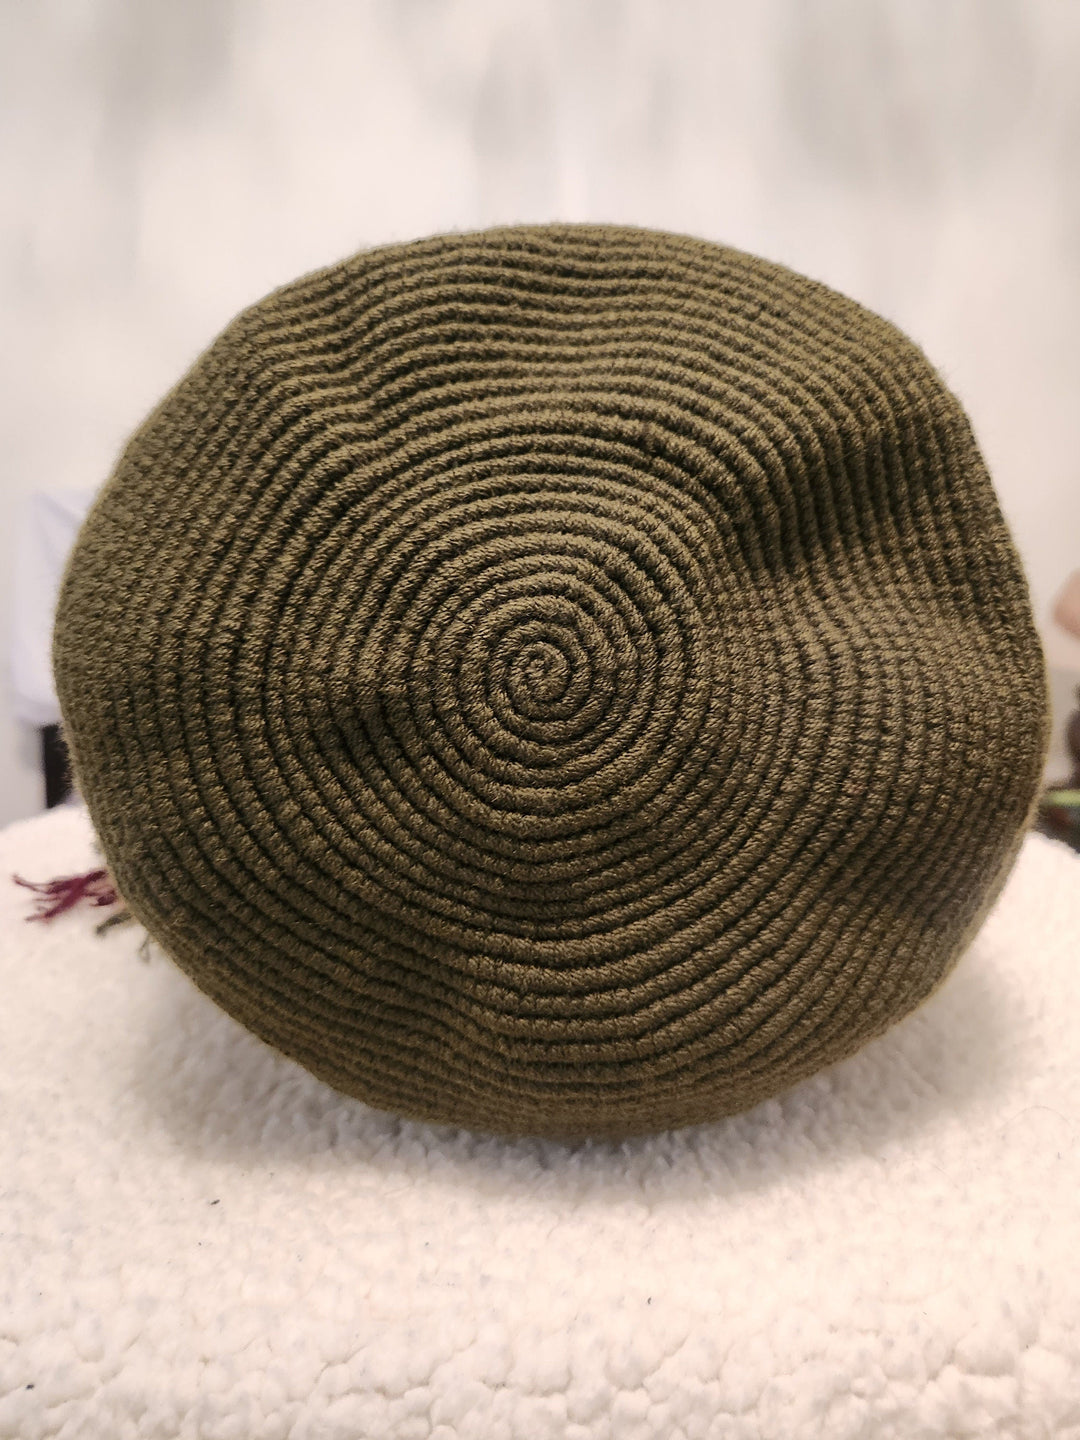 Olive green crochet bag bottom view